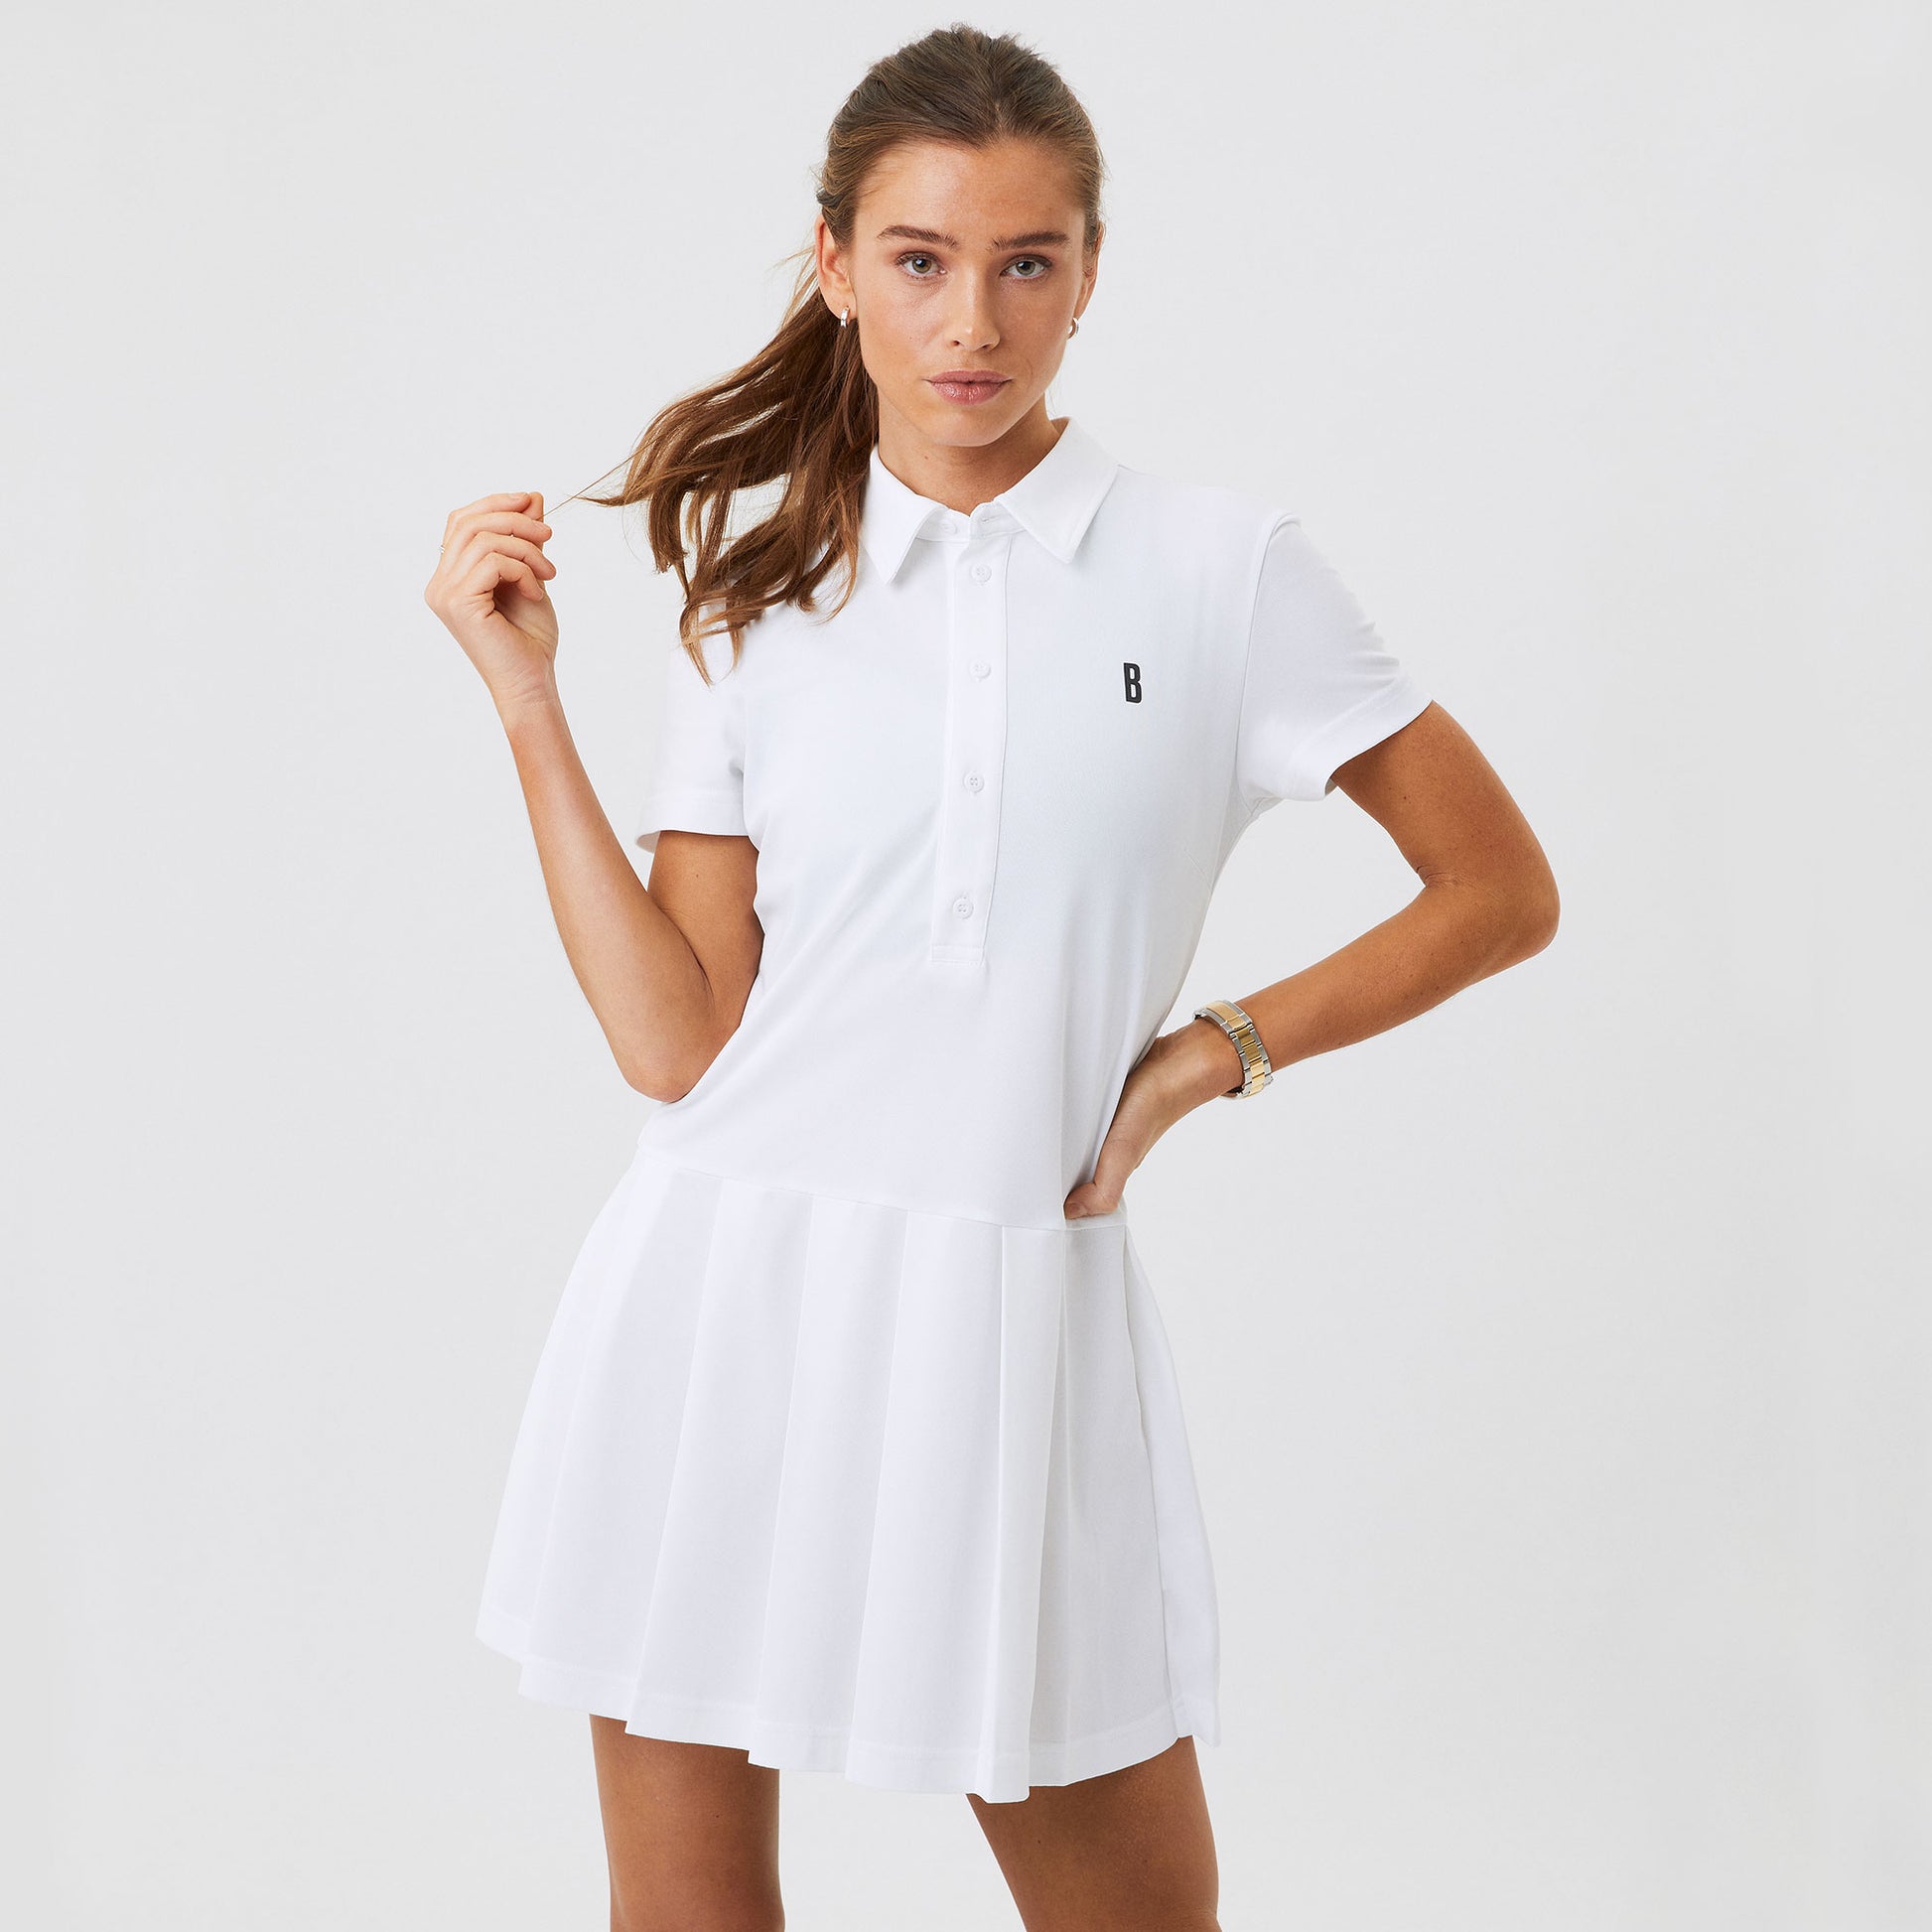 Björn Borg Ace Women's Tennis Polo Dress White (1)